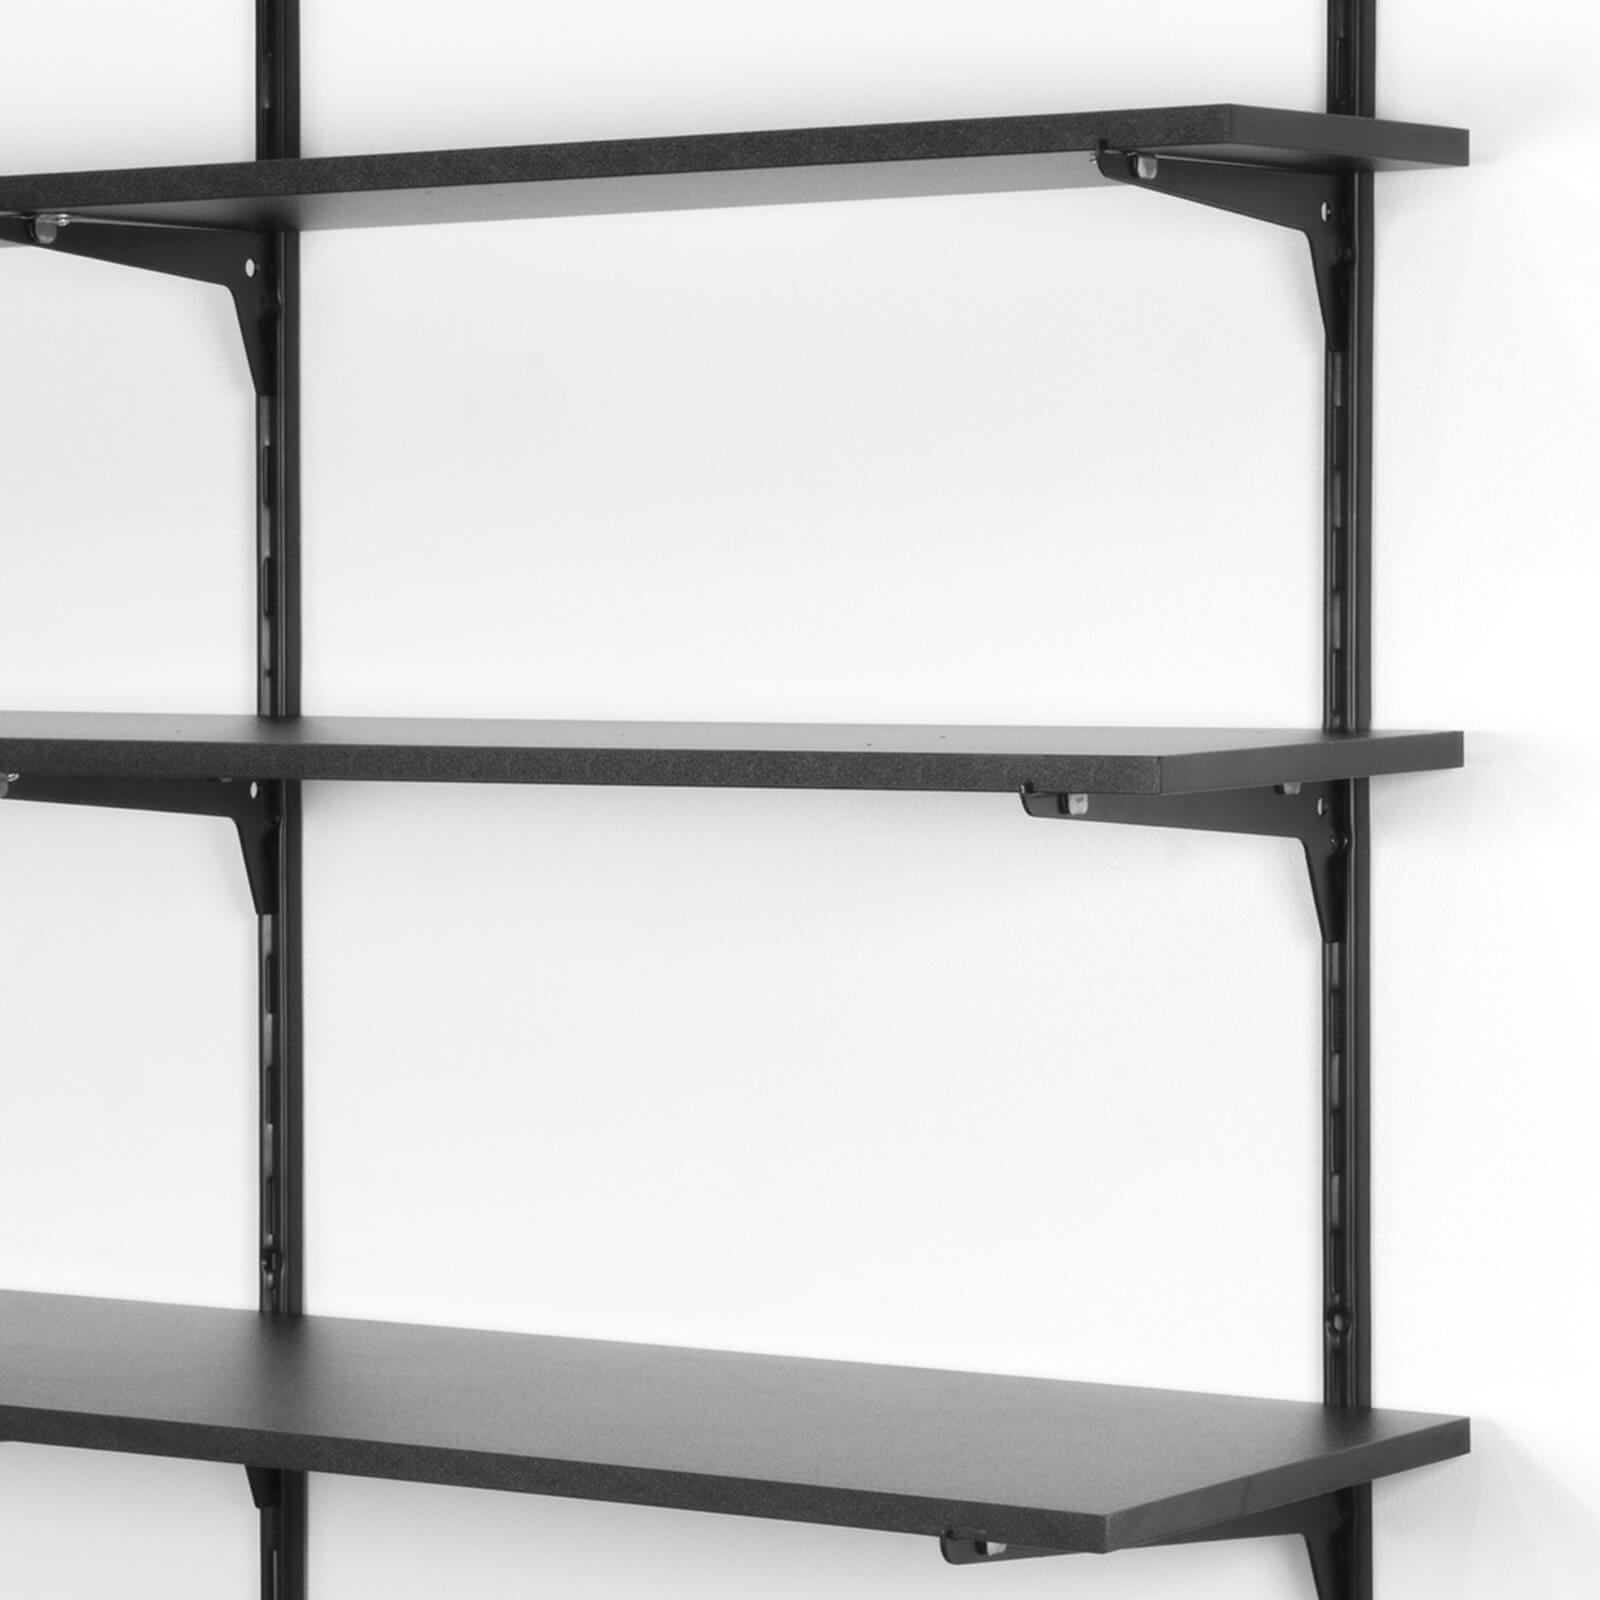 Shelf - Black - 1200x200x16mm